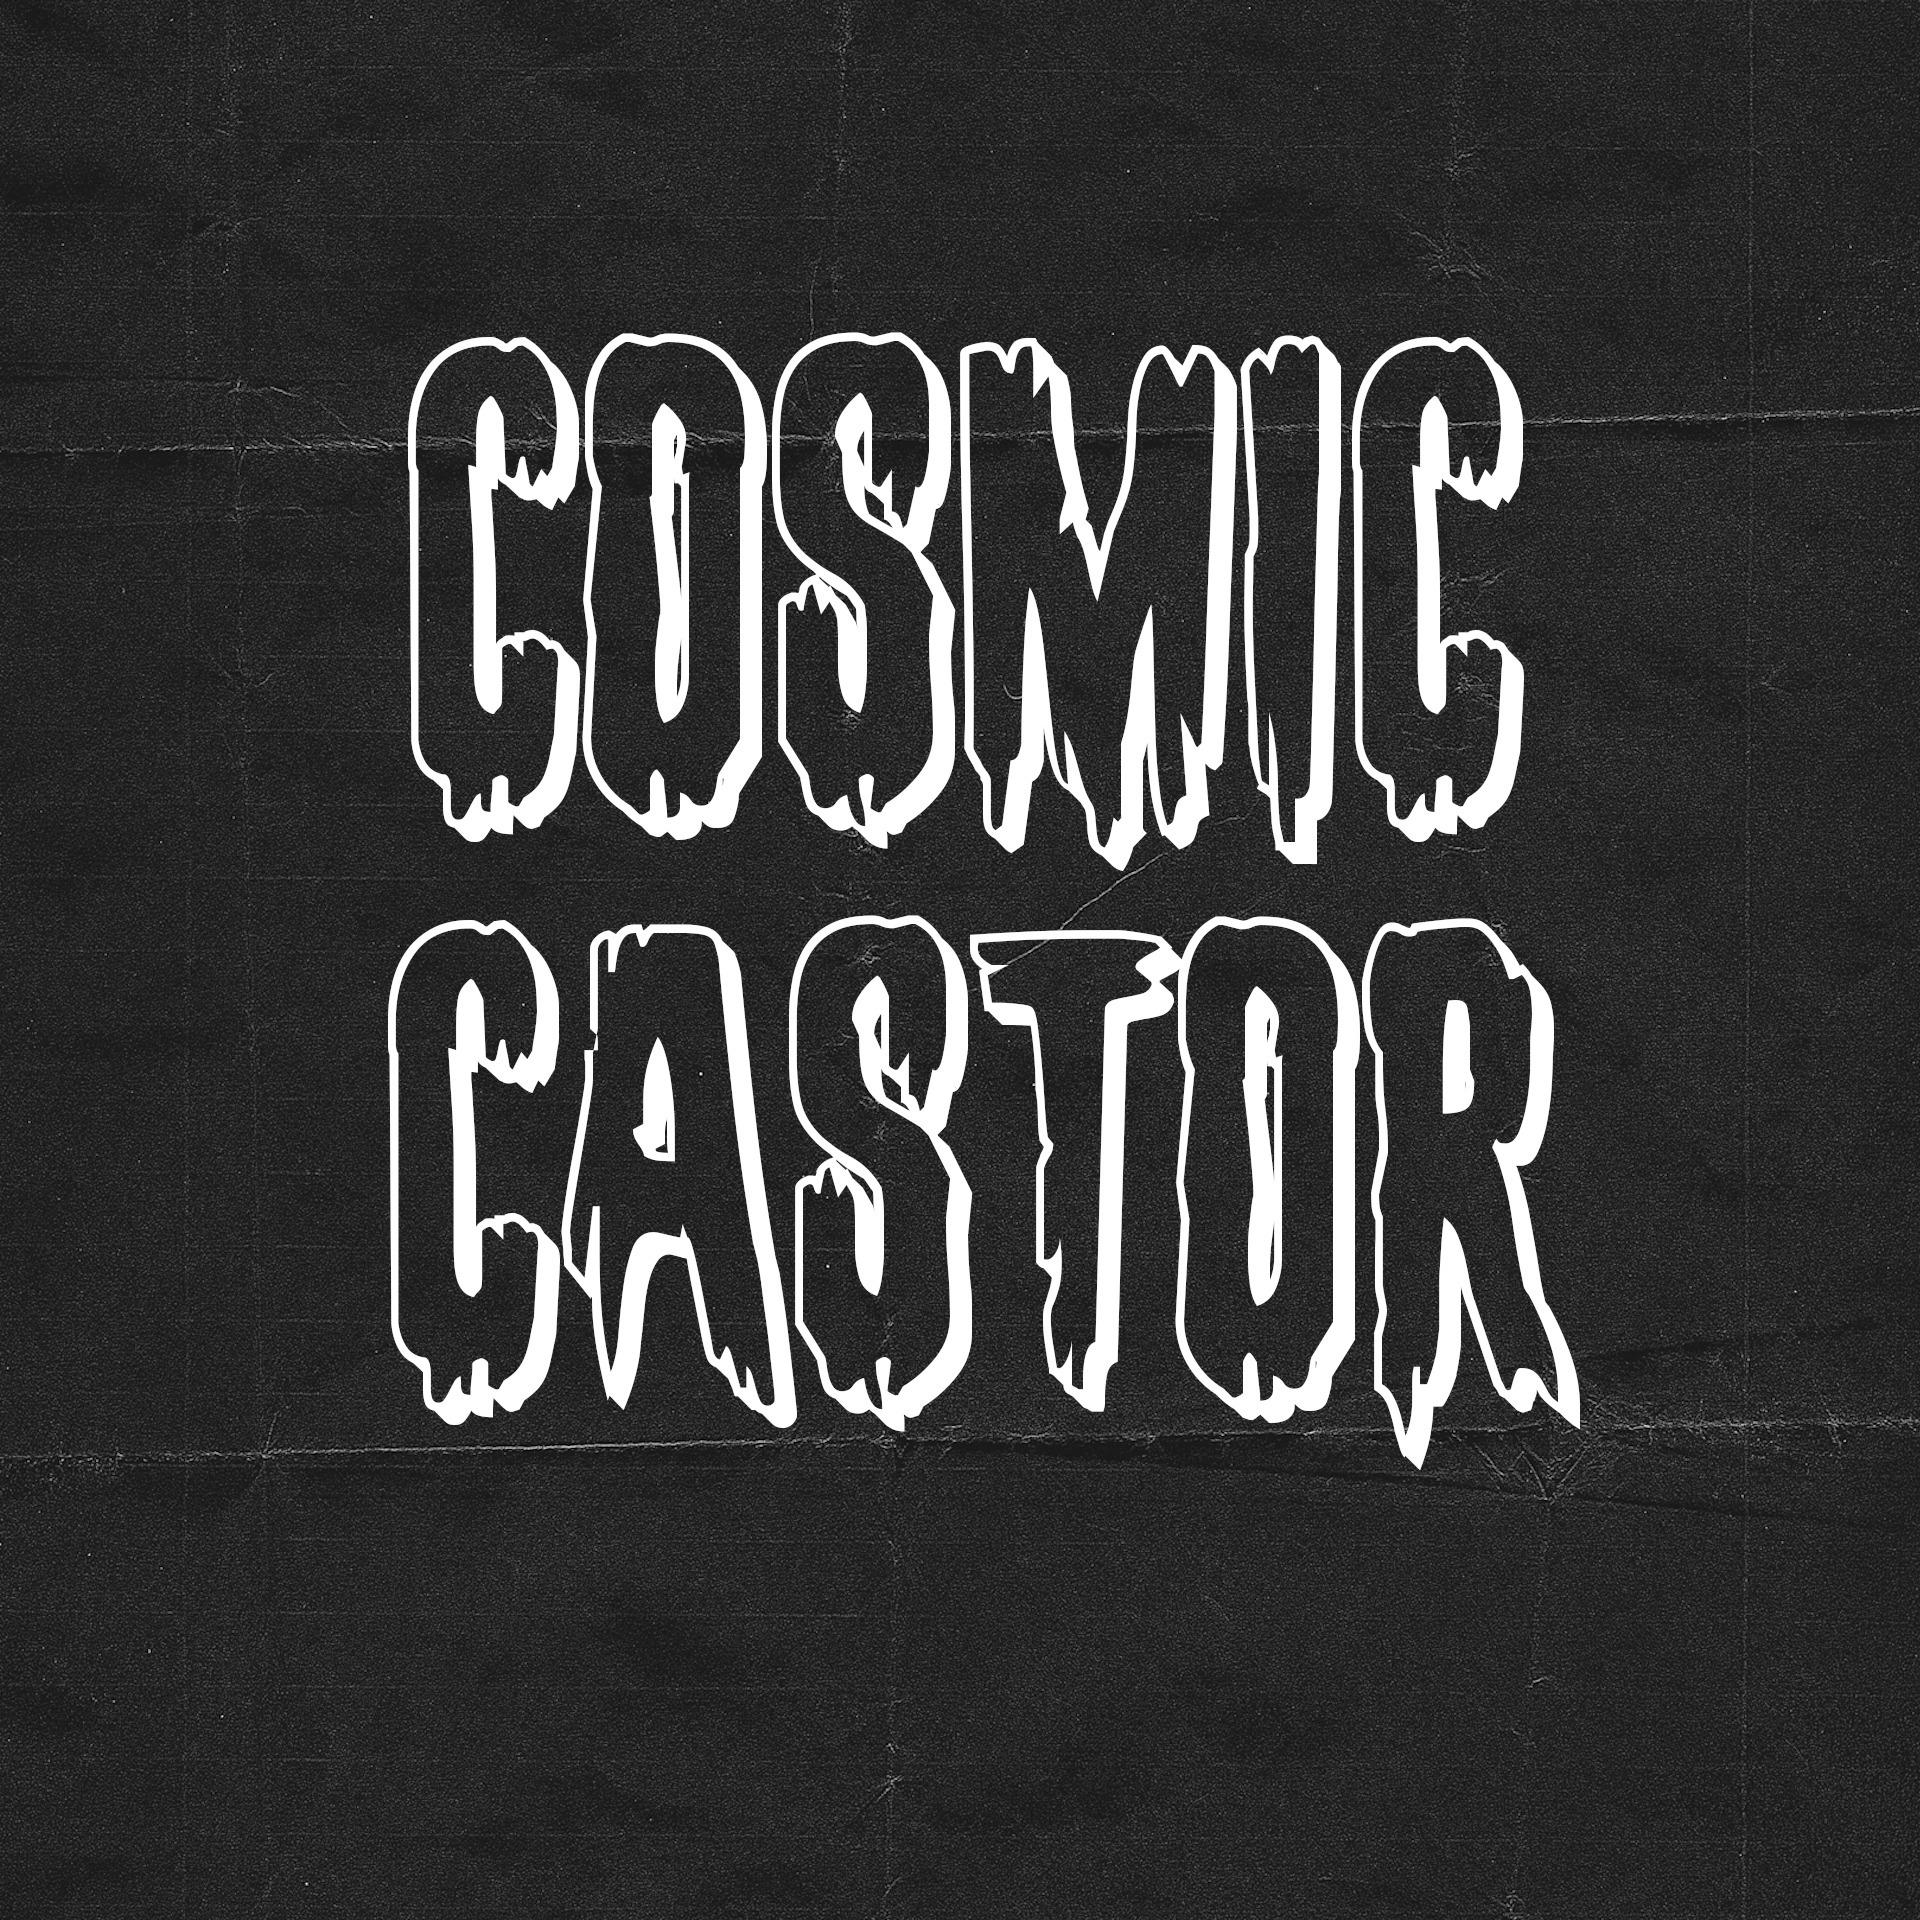 Cosmic Castor